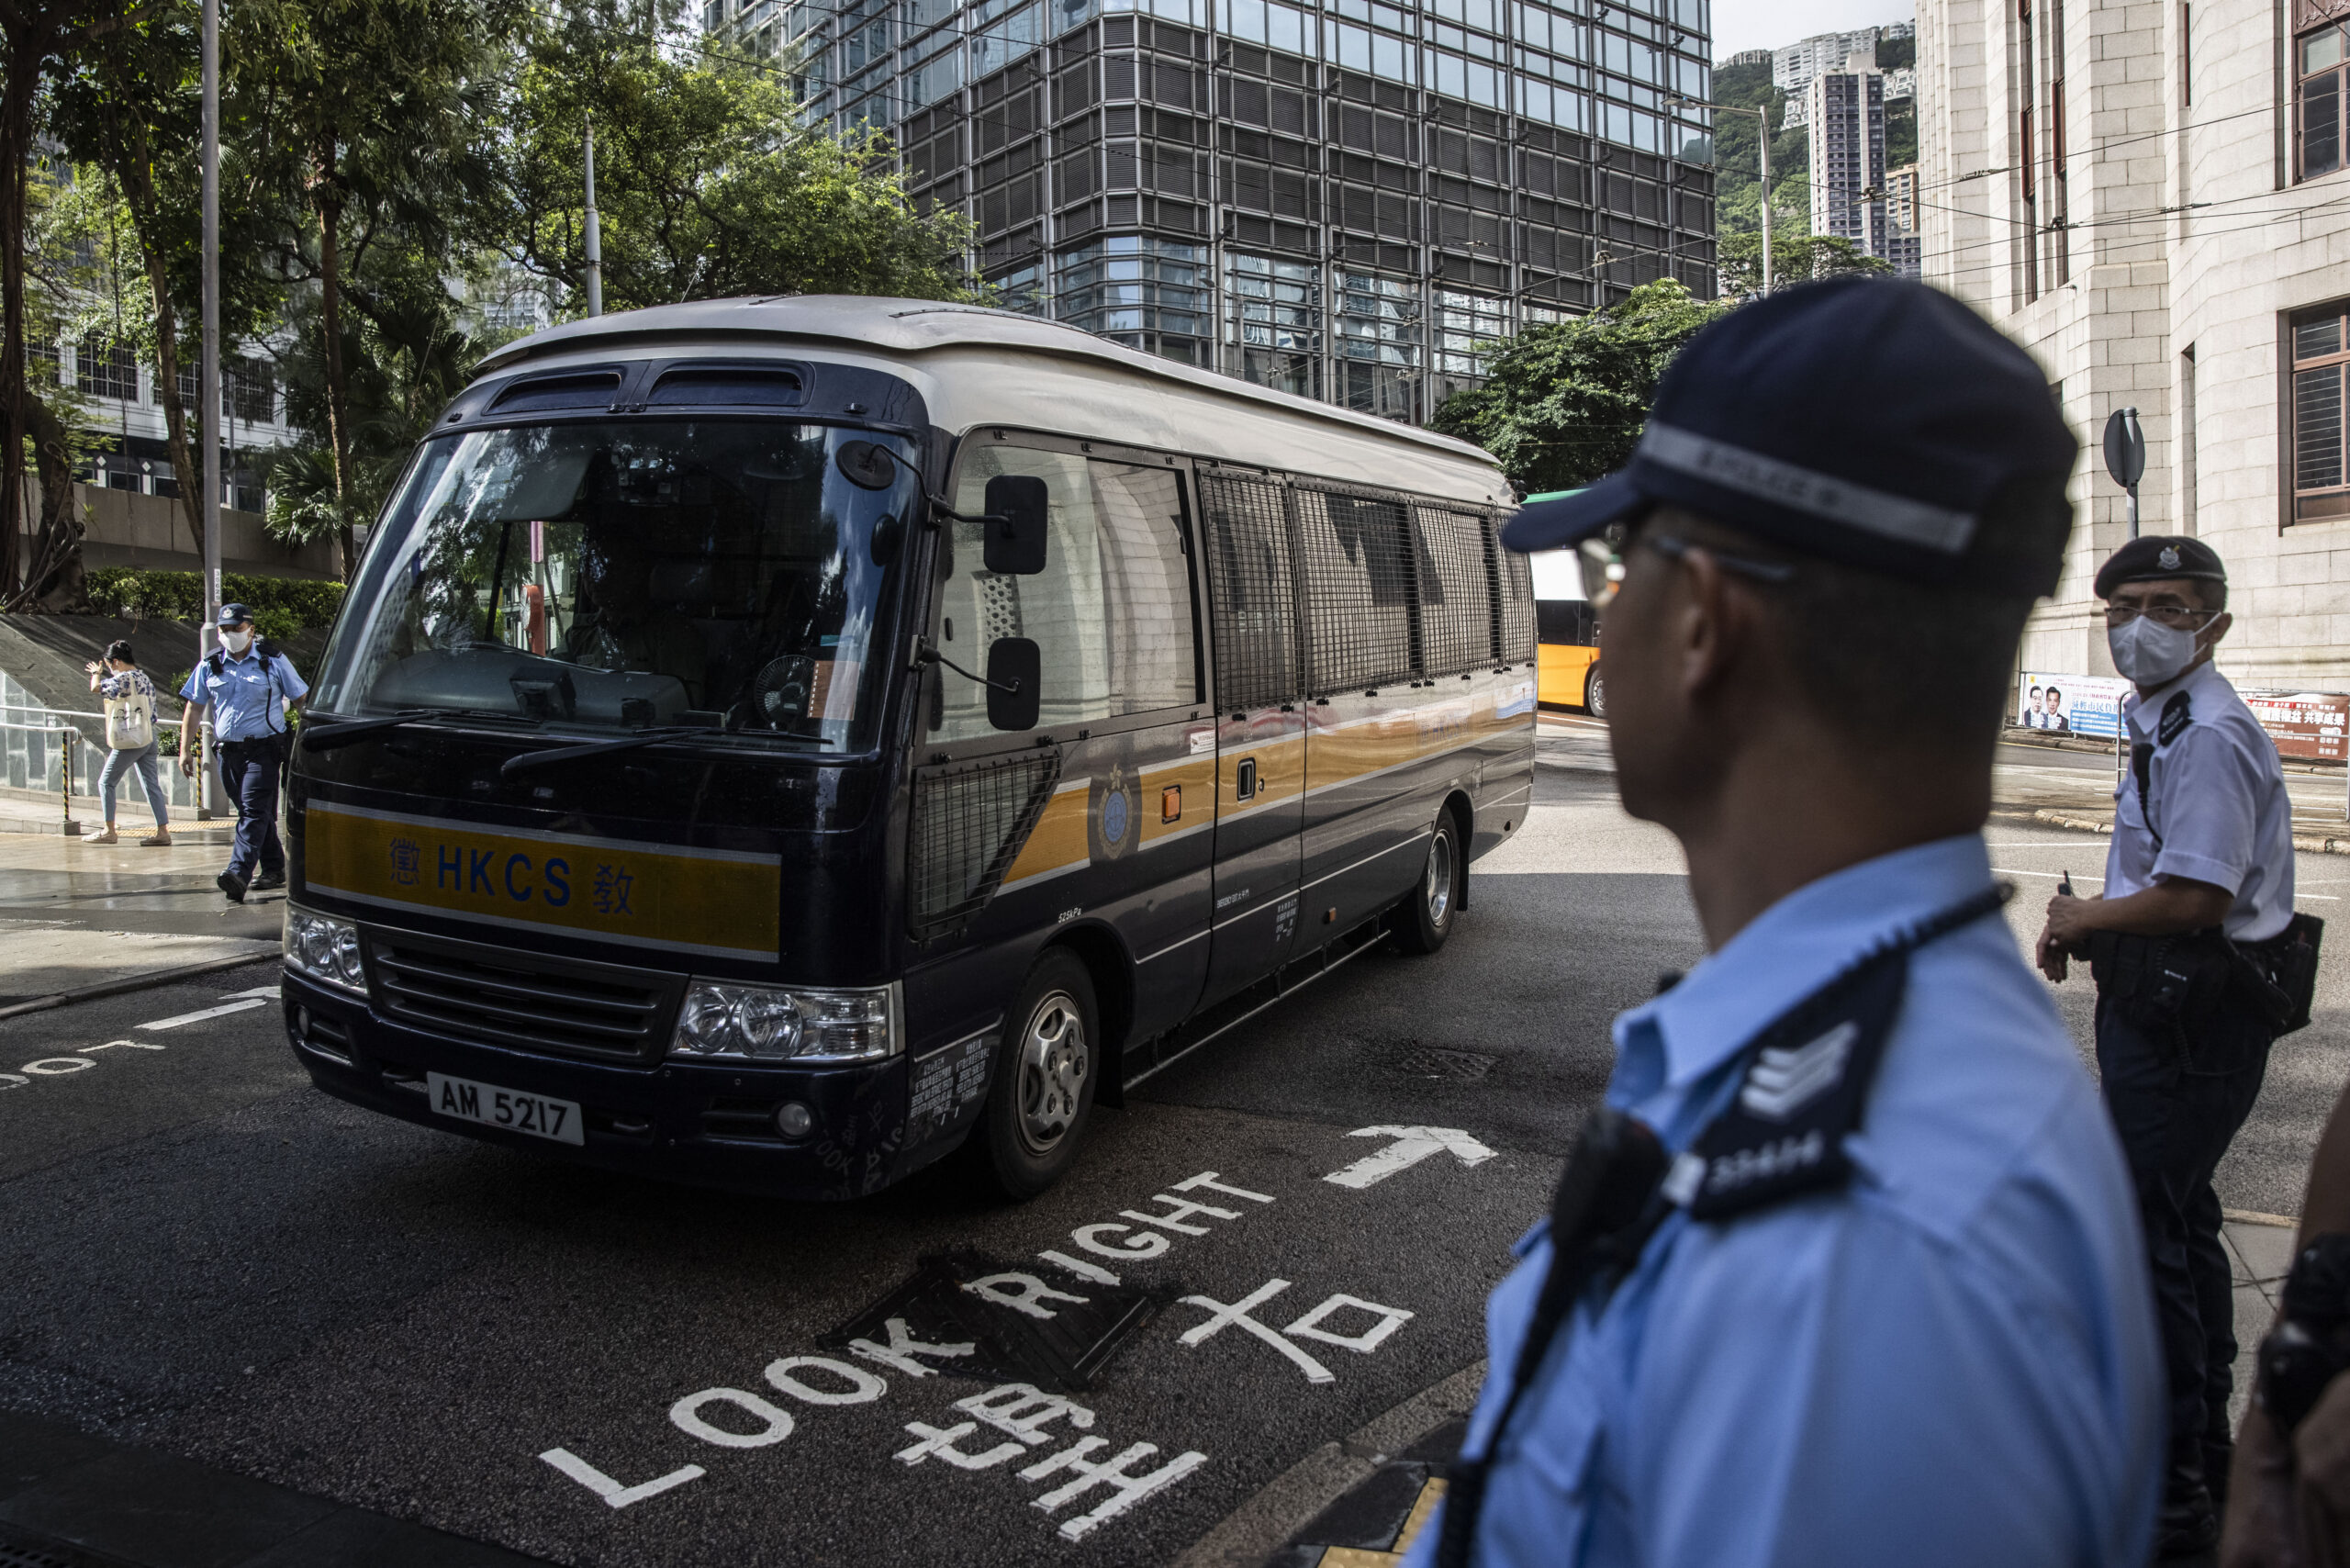 Hong Kong arrests eighth person for Tiananmen social media posts